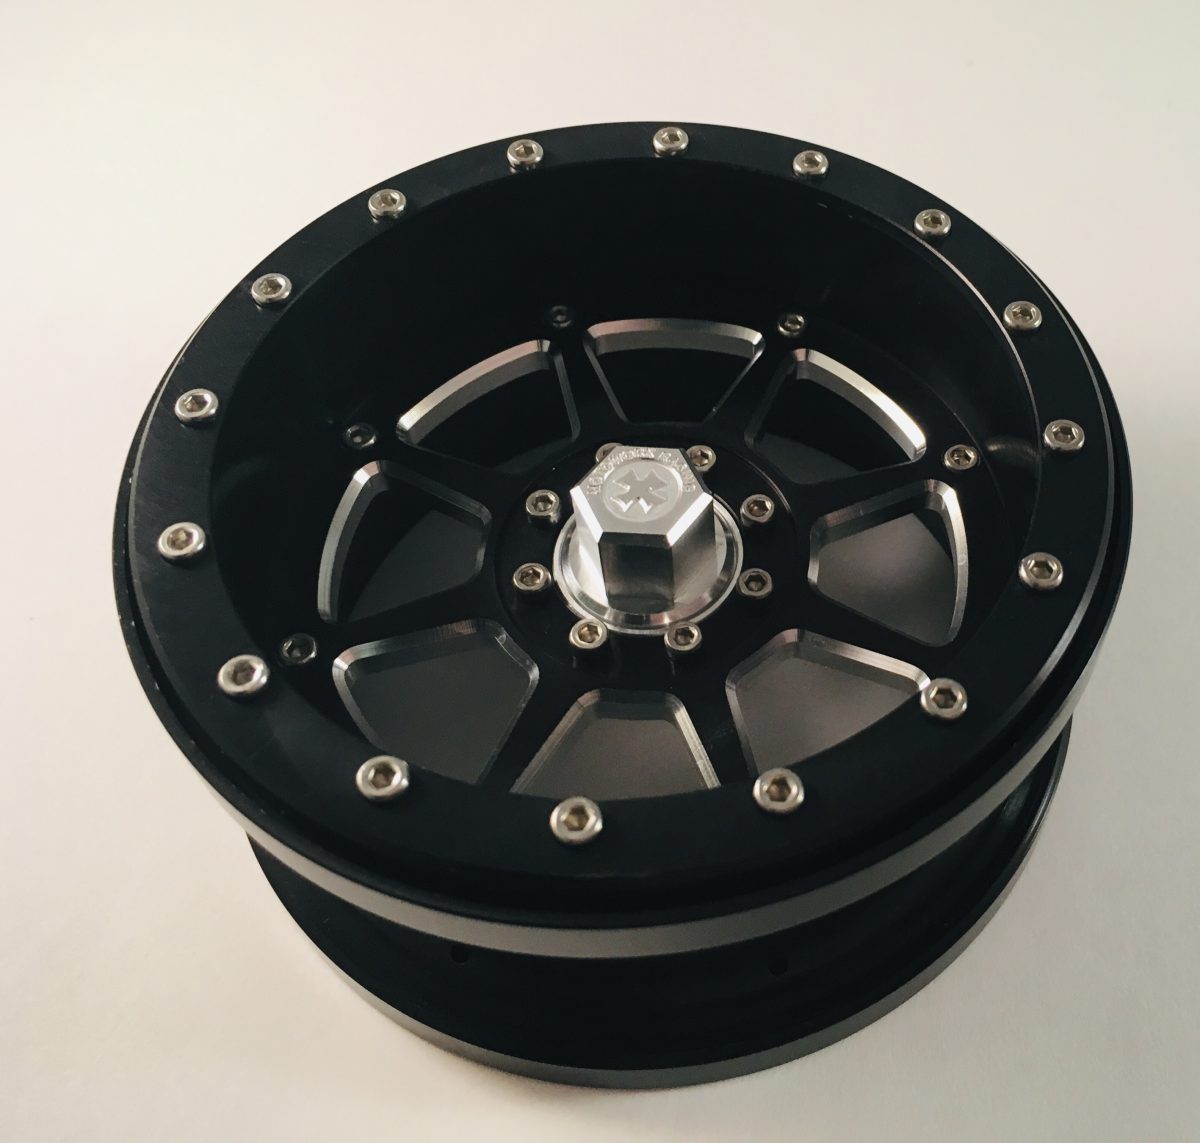 CNC Alloy 3.8 Inch Beadlock Wheels 8-Spoked 2pcs W/O Tire For RC Crawler  #1493 